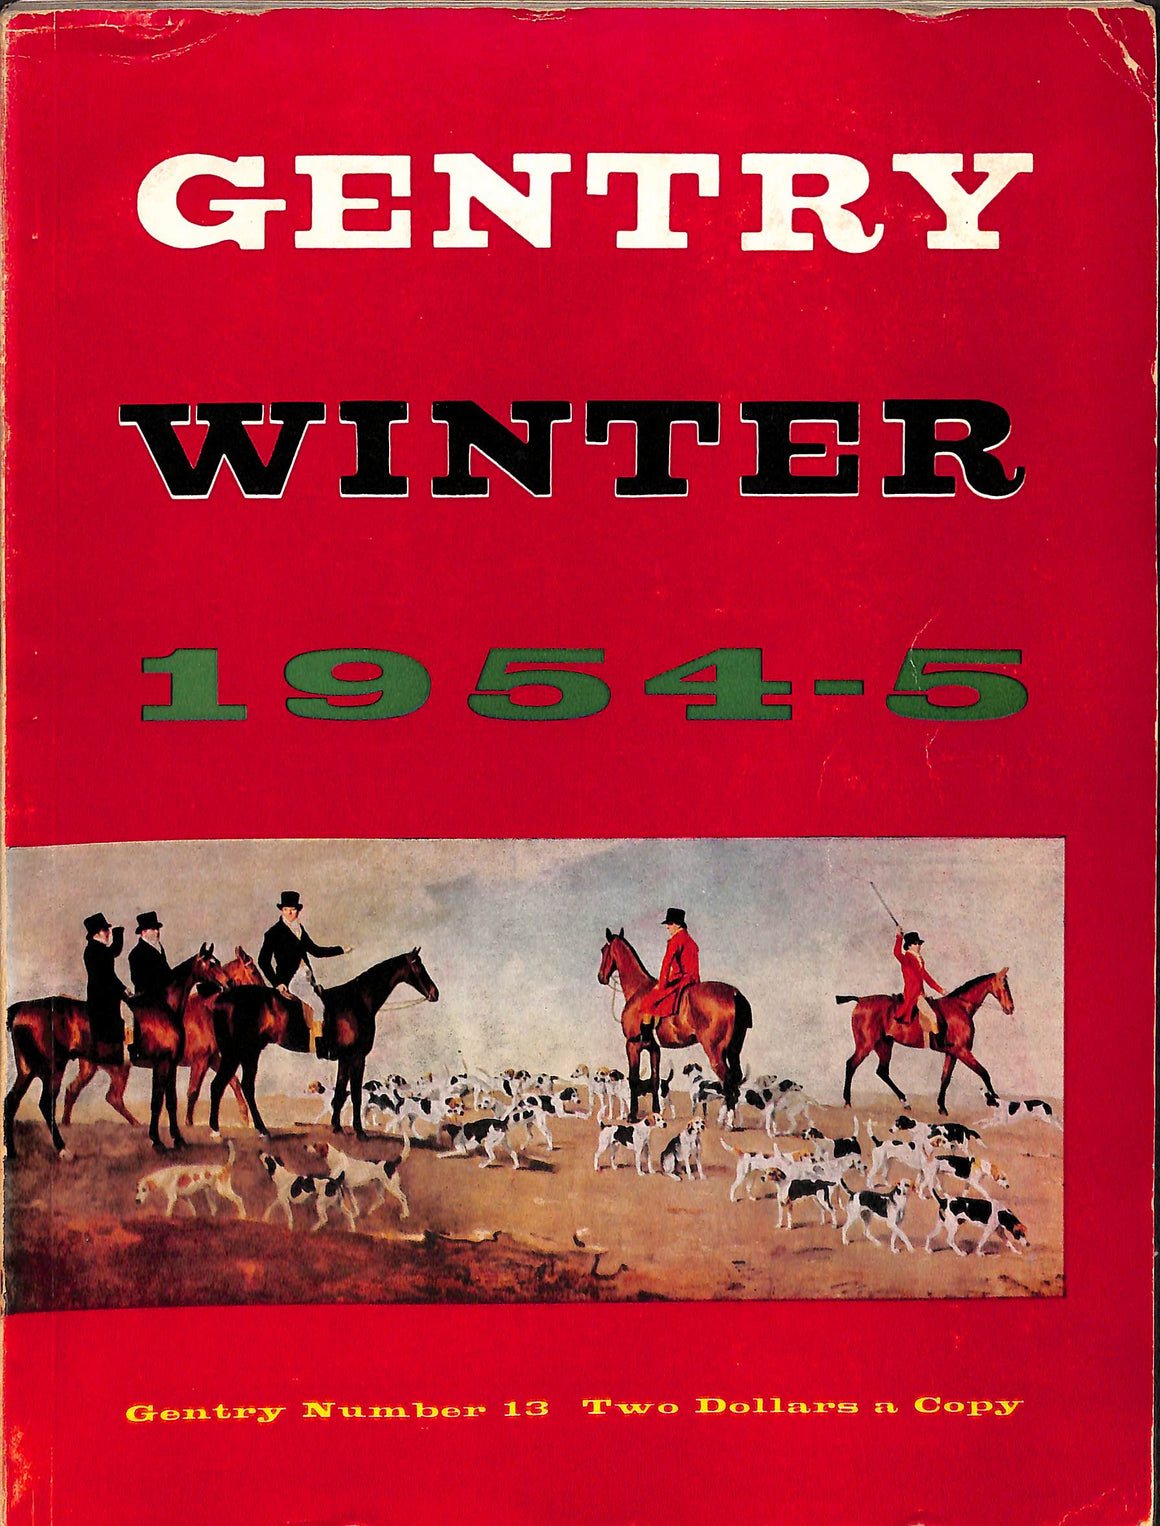 "Gentry Number 13 Winter 1954-5"